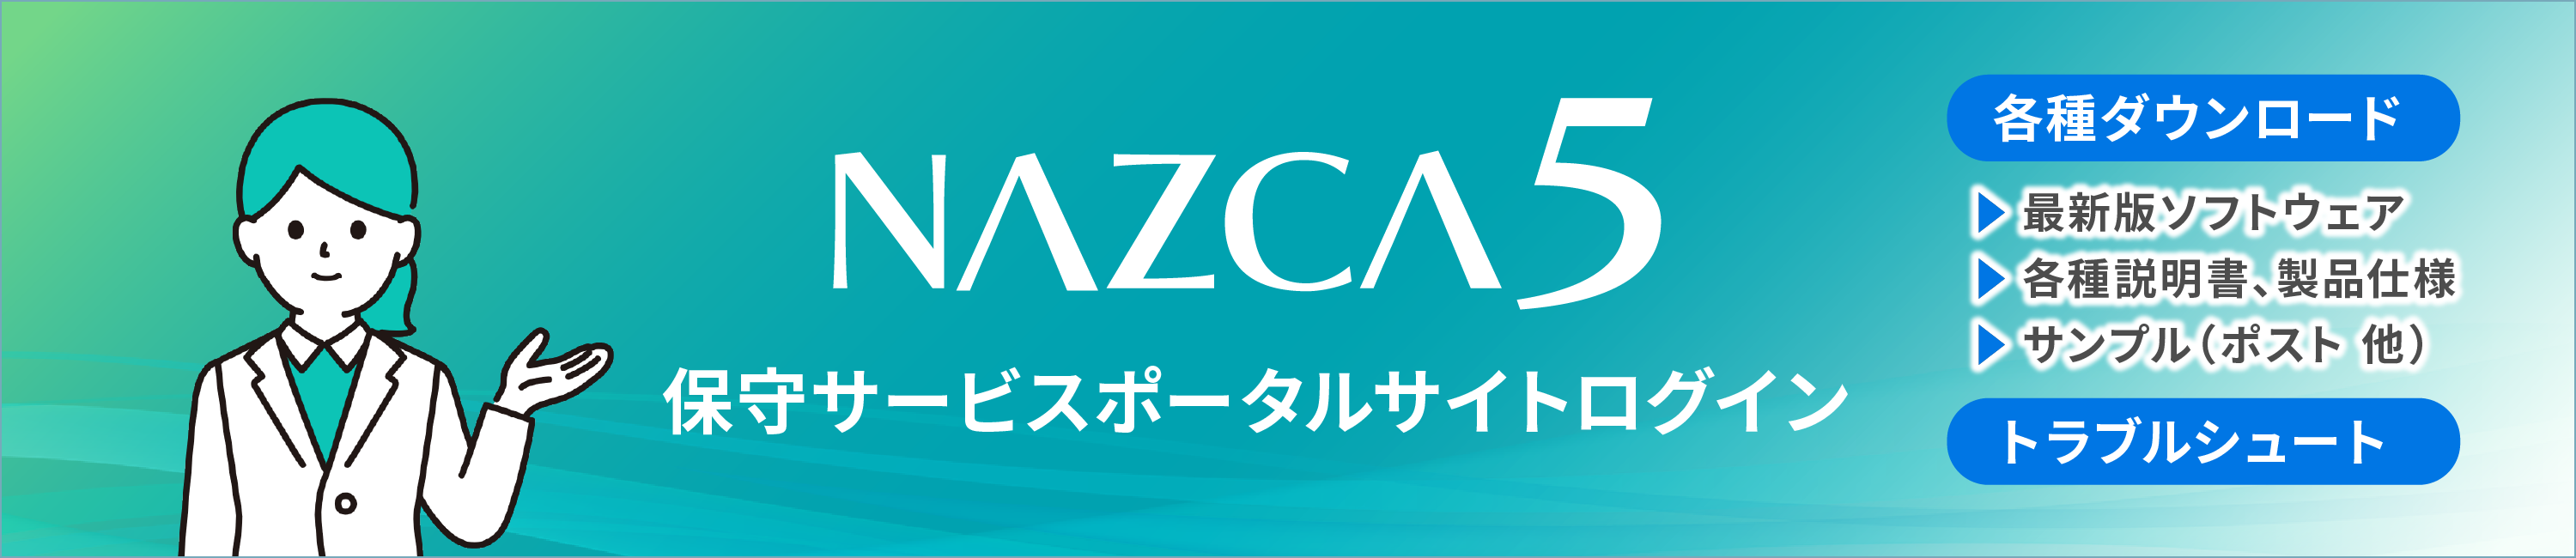 NAZCA5 ポータルサイトログイン